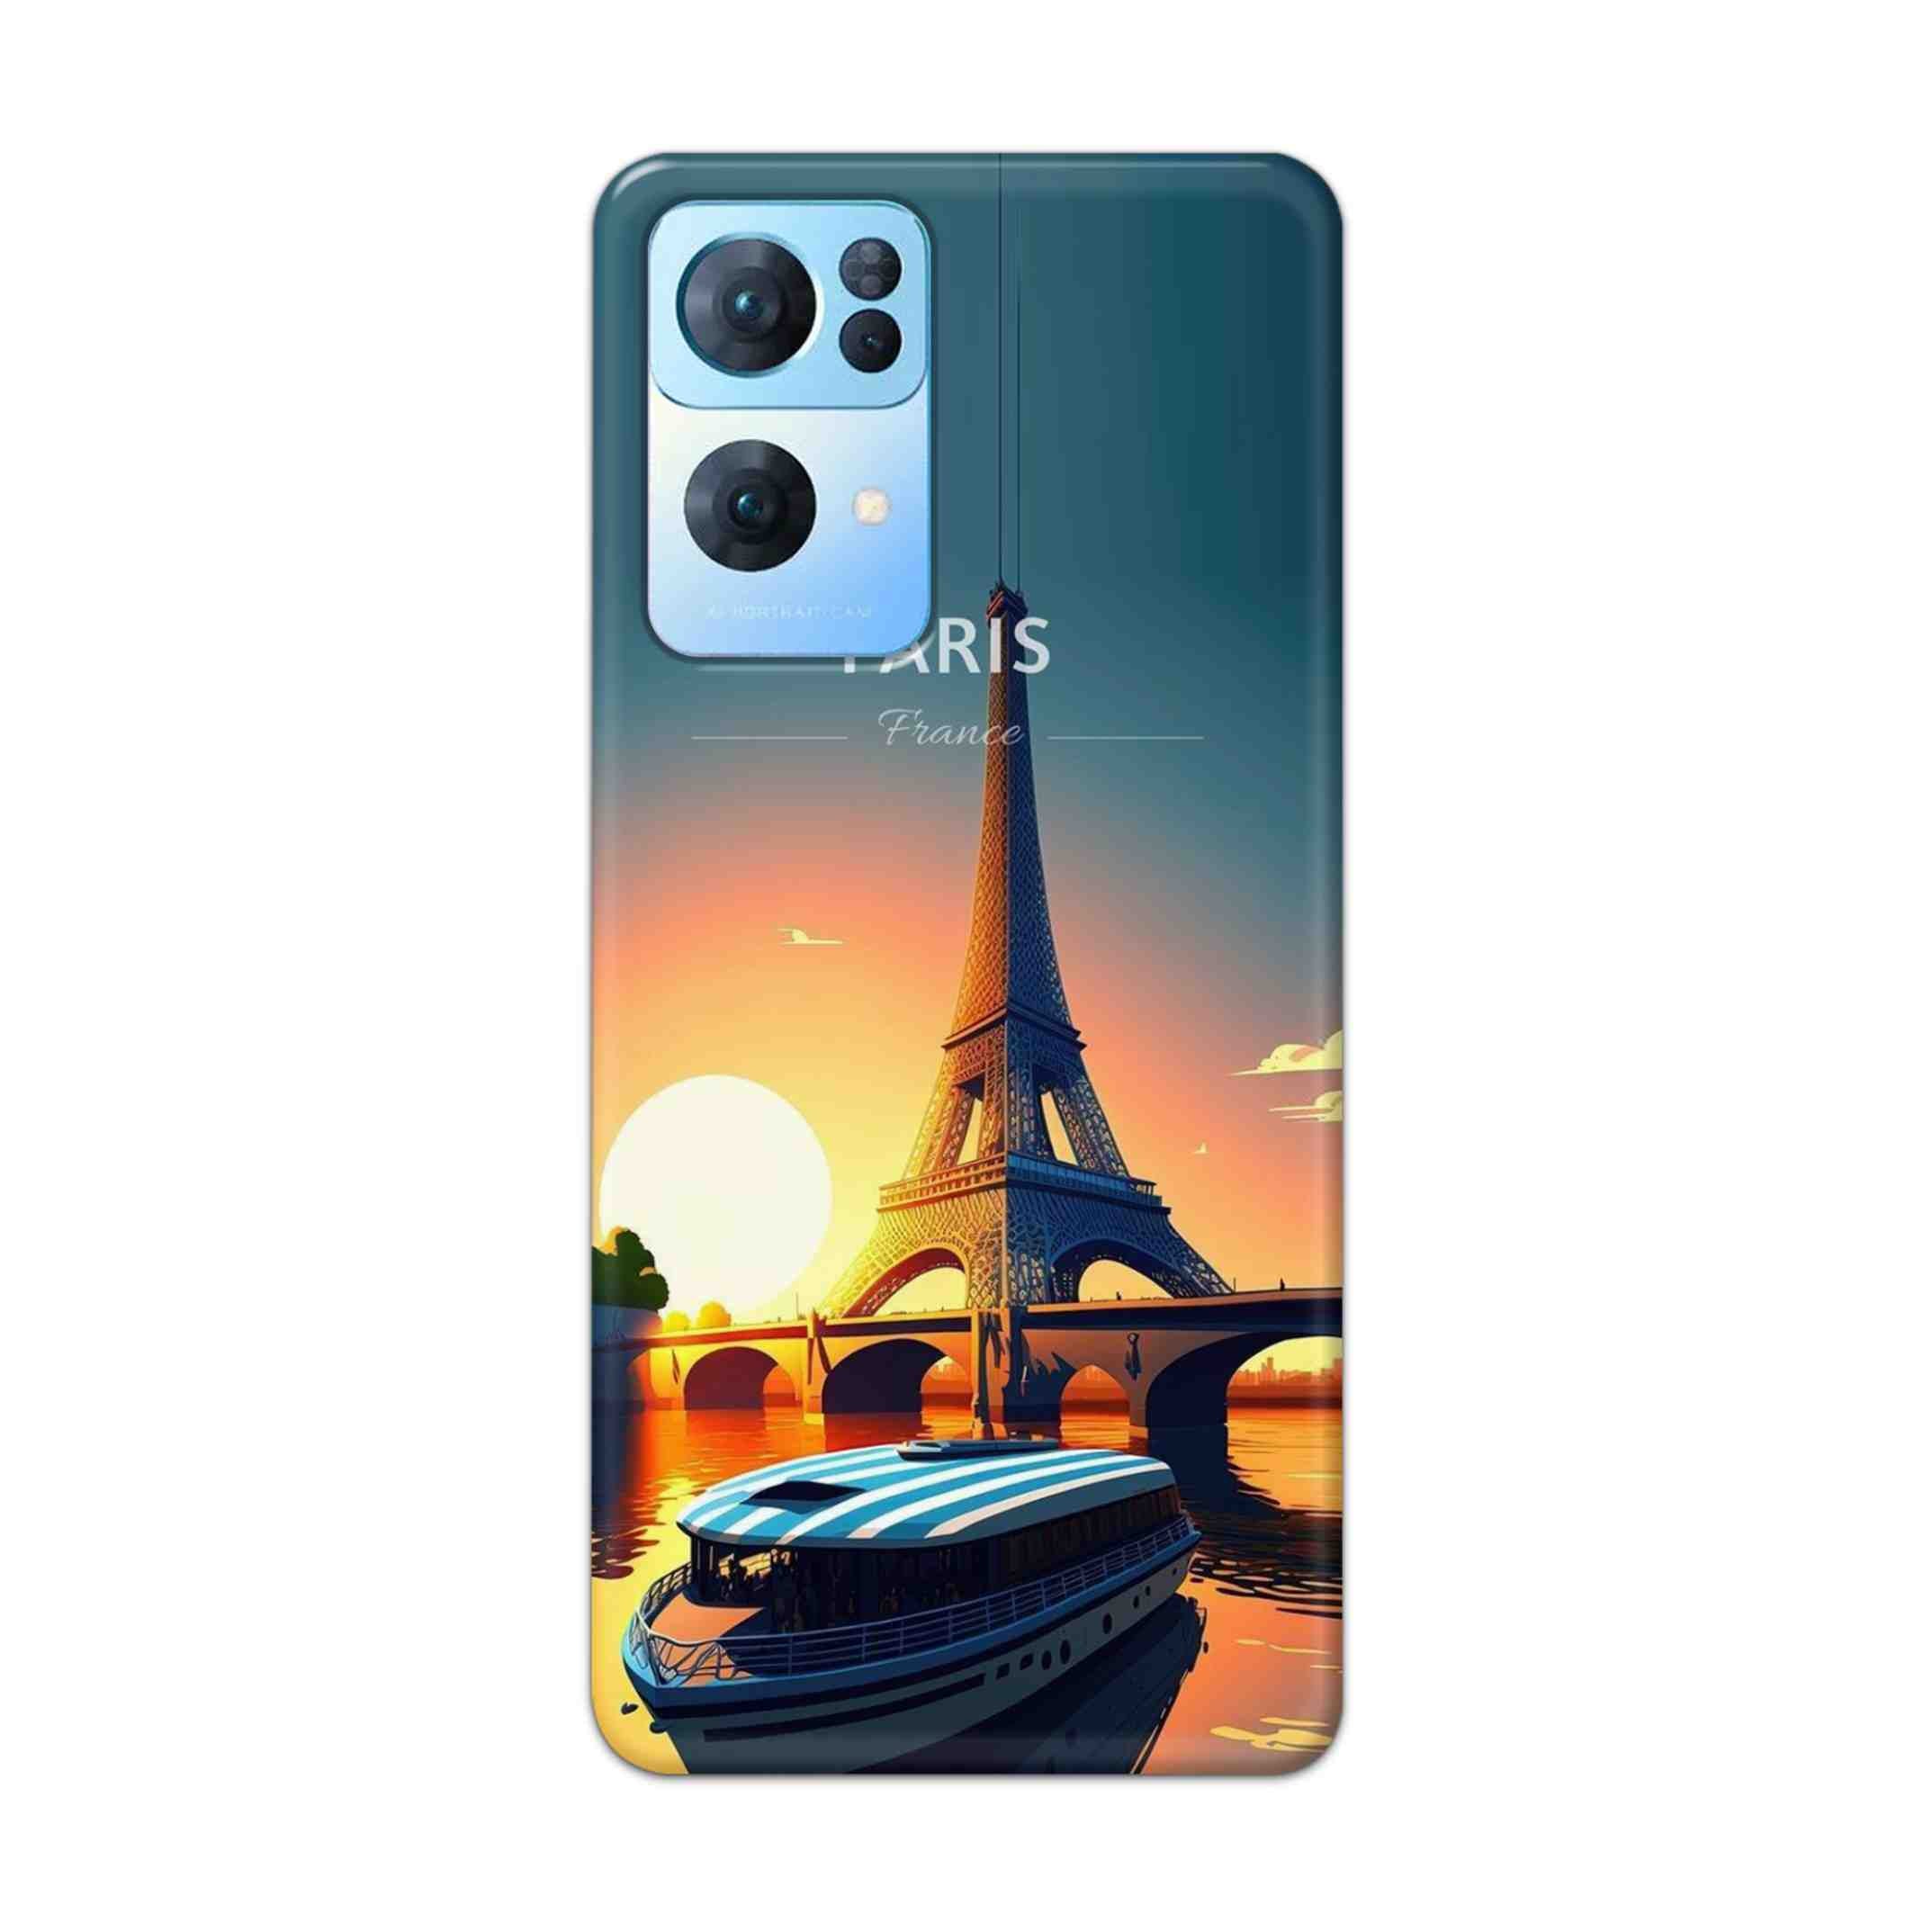 Buy France Hard Back Mobile Phone Case Cover For Oppo Reno 7 Pro Online